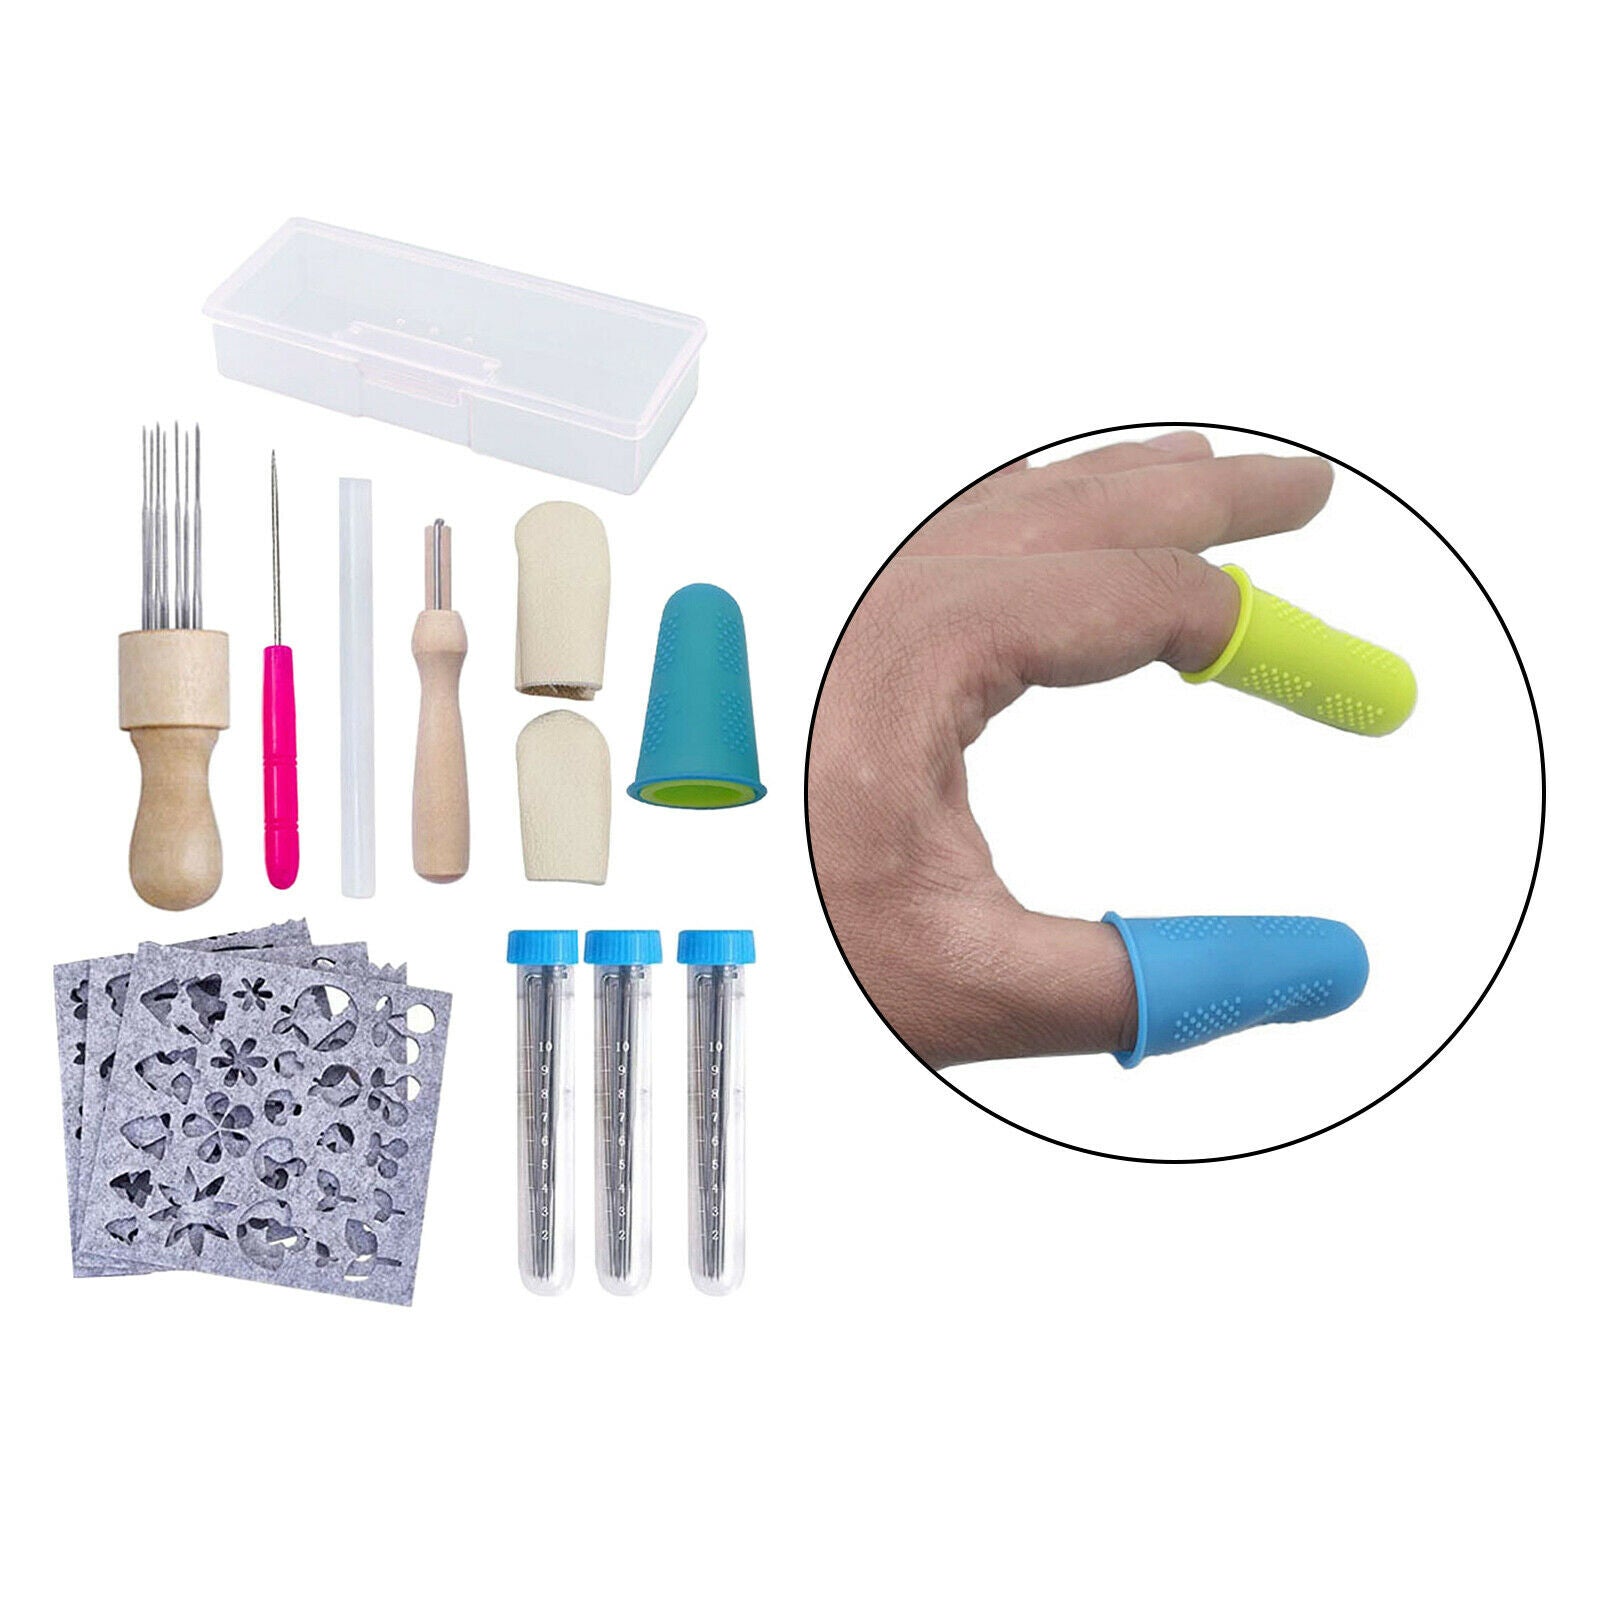 52x Needle Felting Kit with Awl Glue Stick for Beginner DIY Felting Projects